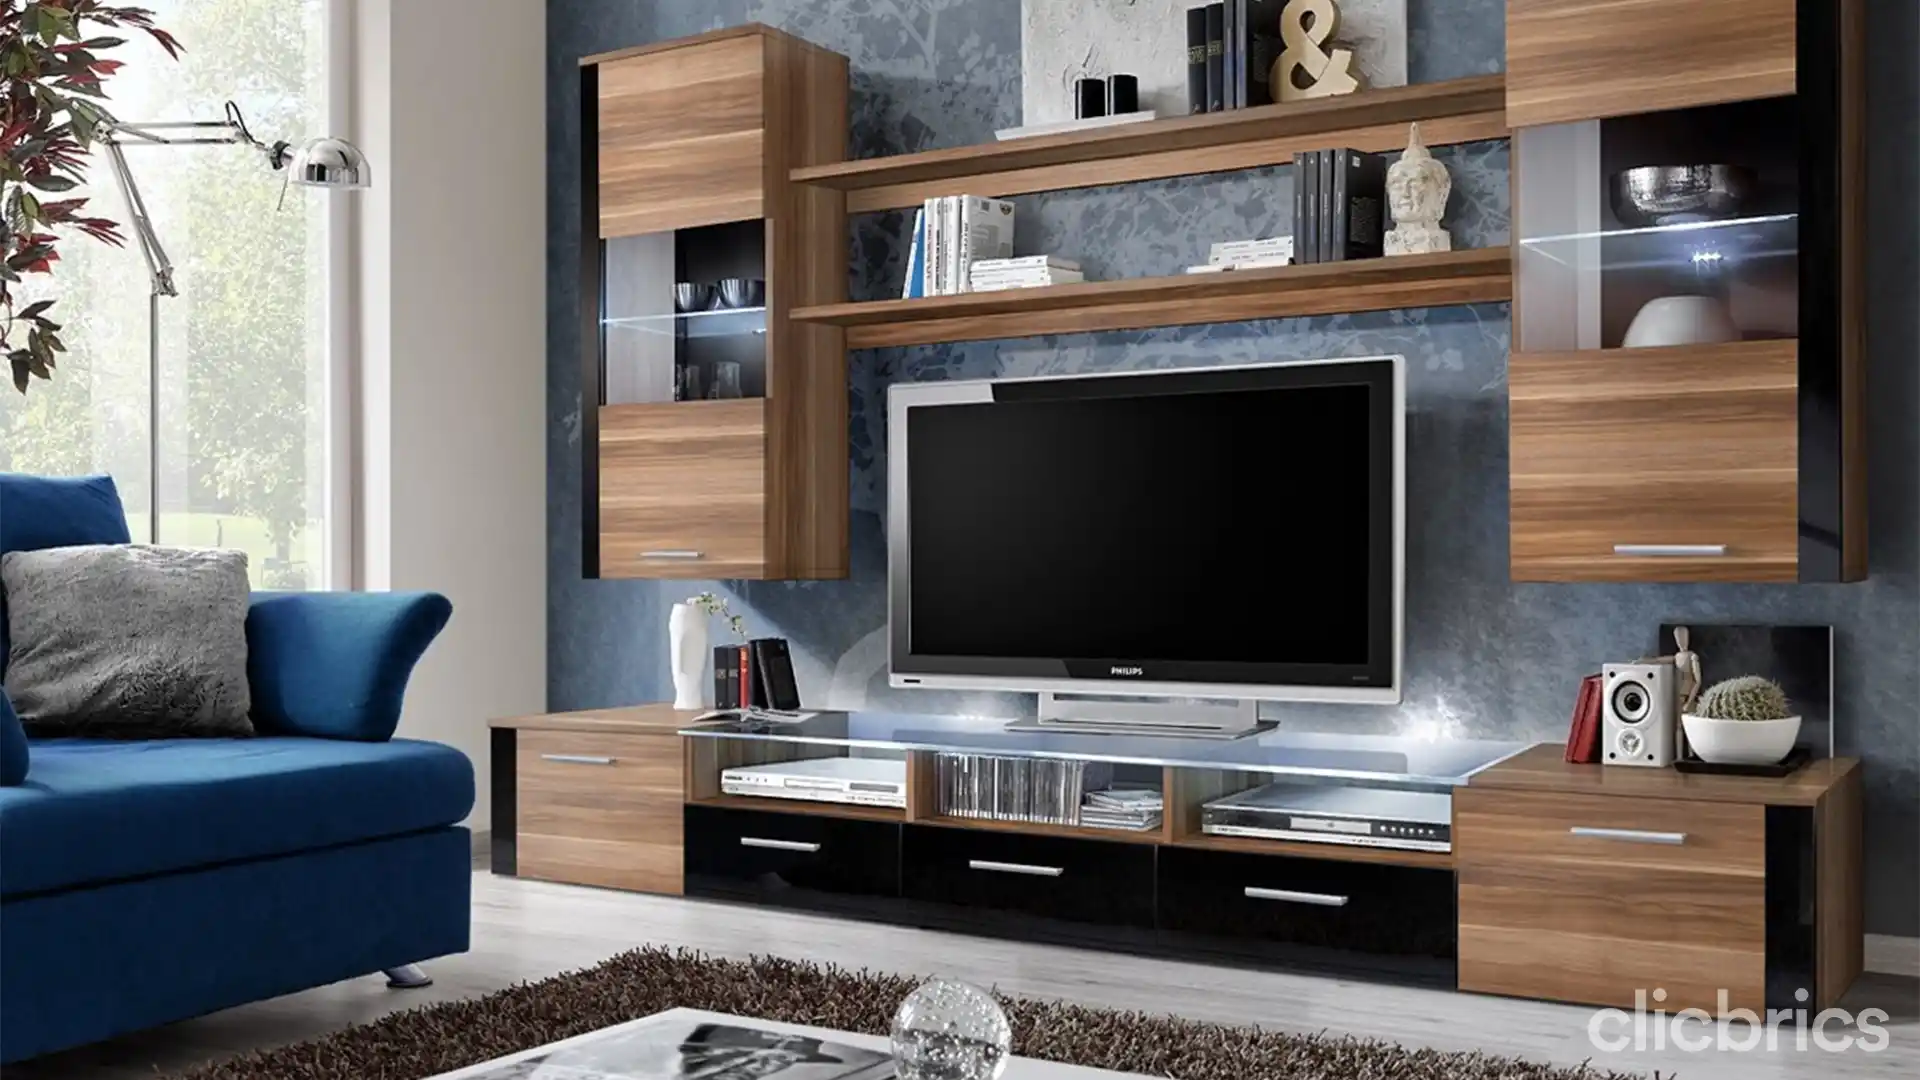 N Design] 8ft Modern TV Cabinet / Wall Mounted Tv Cabinet / Living Room  Cabinet / Hall Cabinet / Max 80